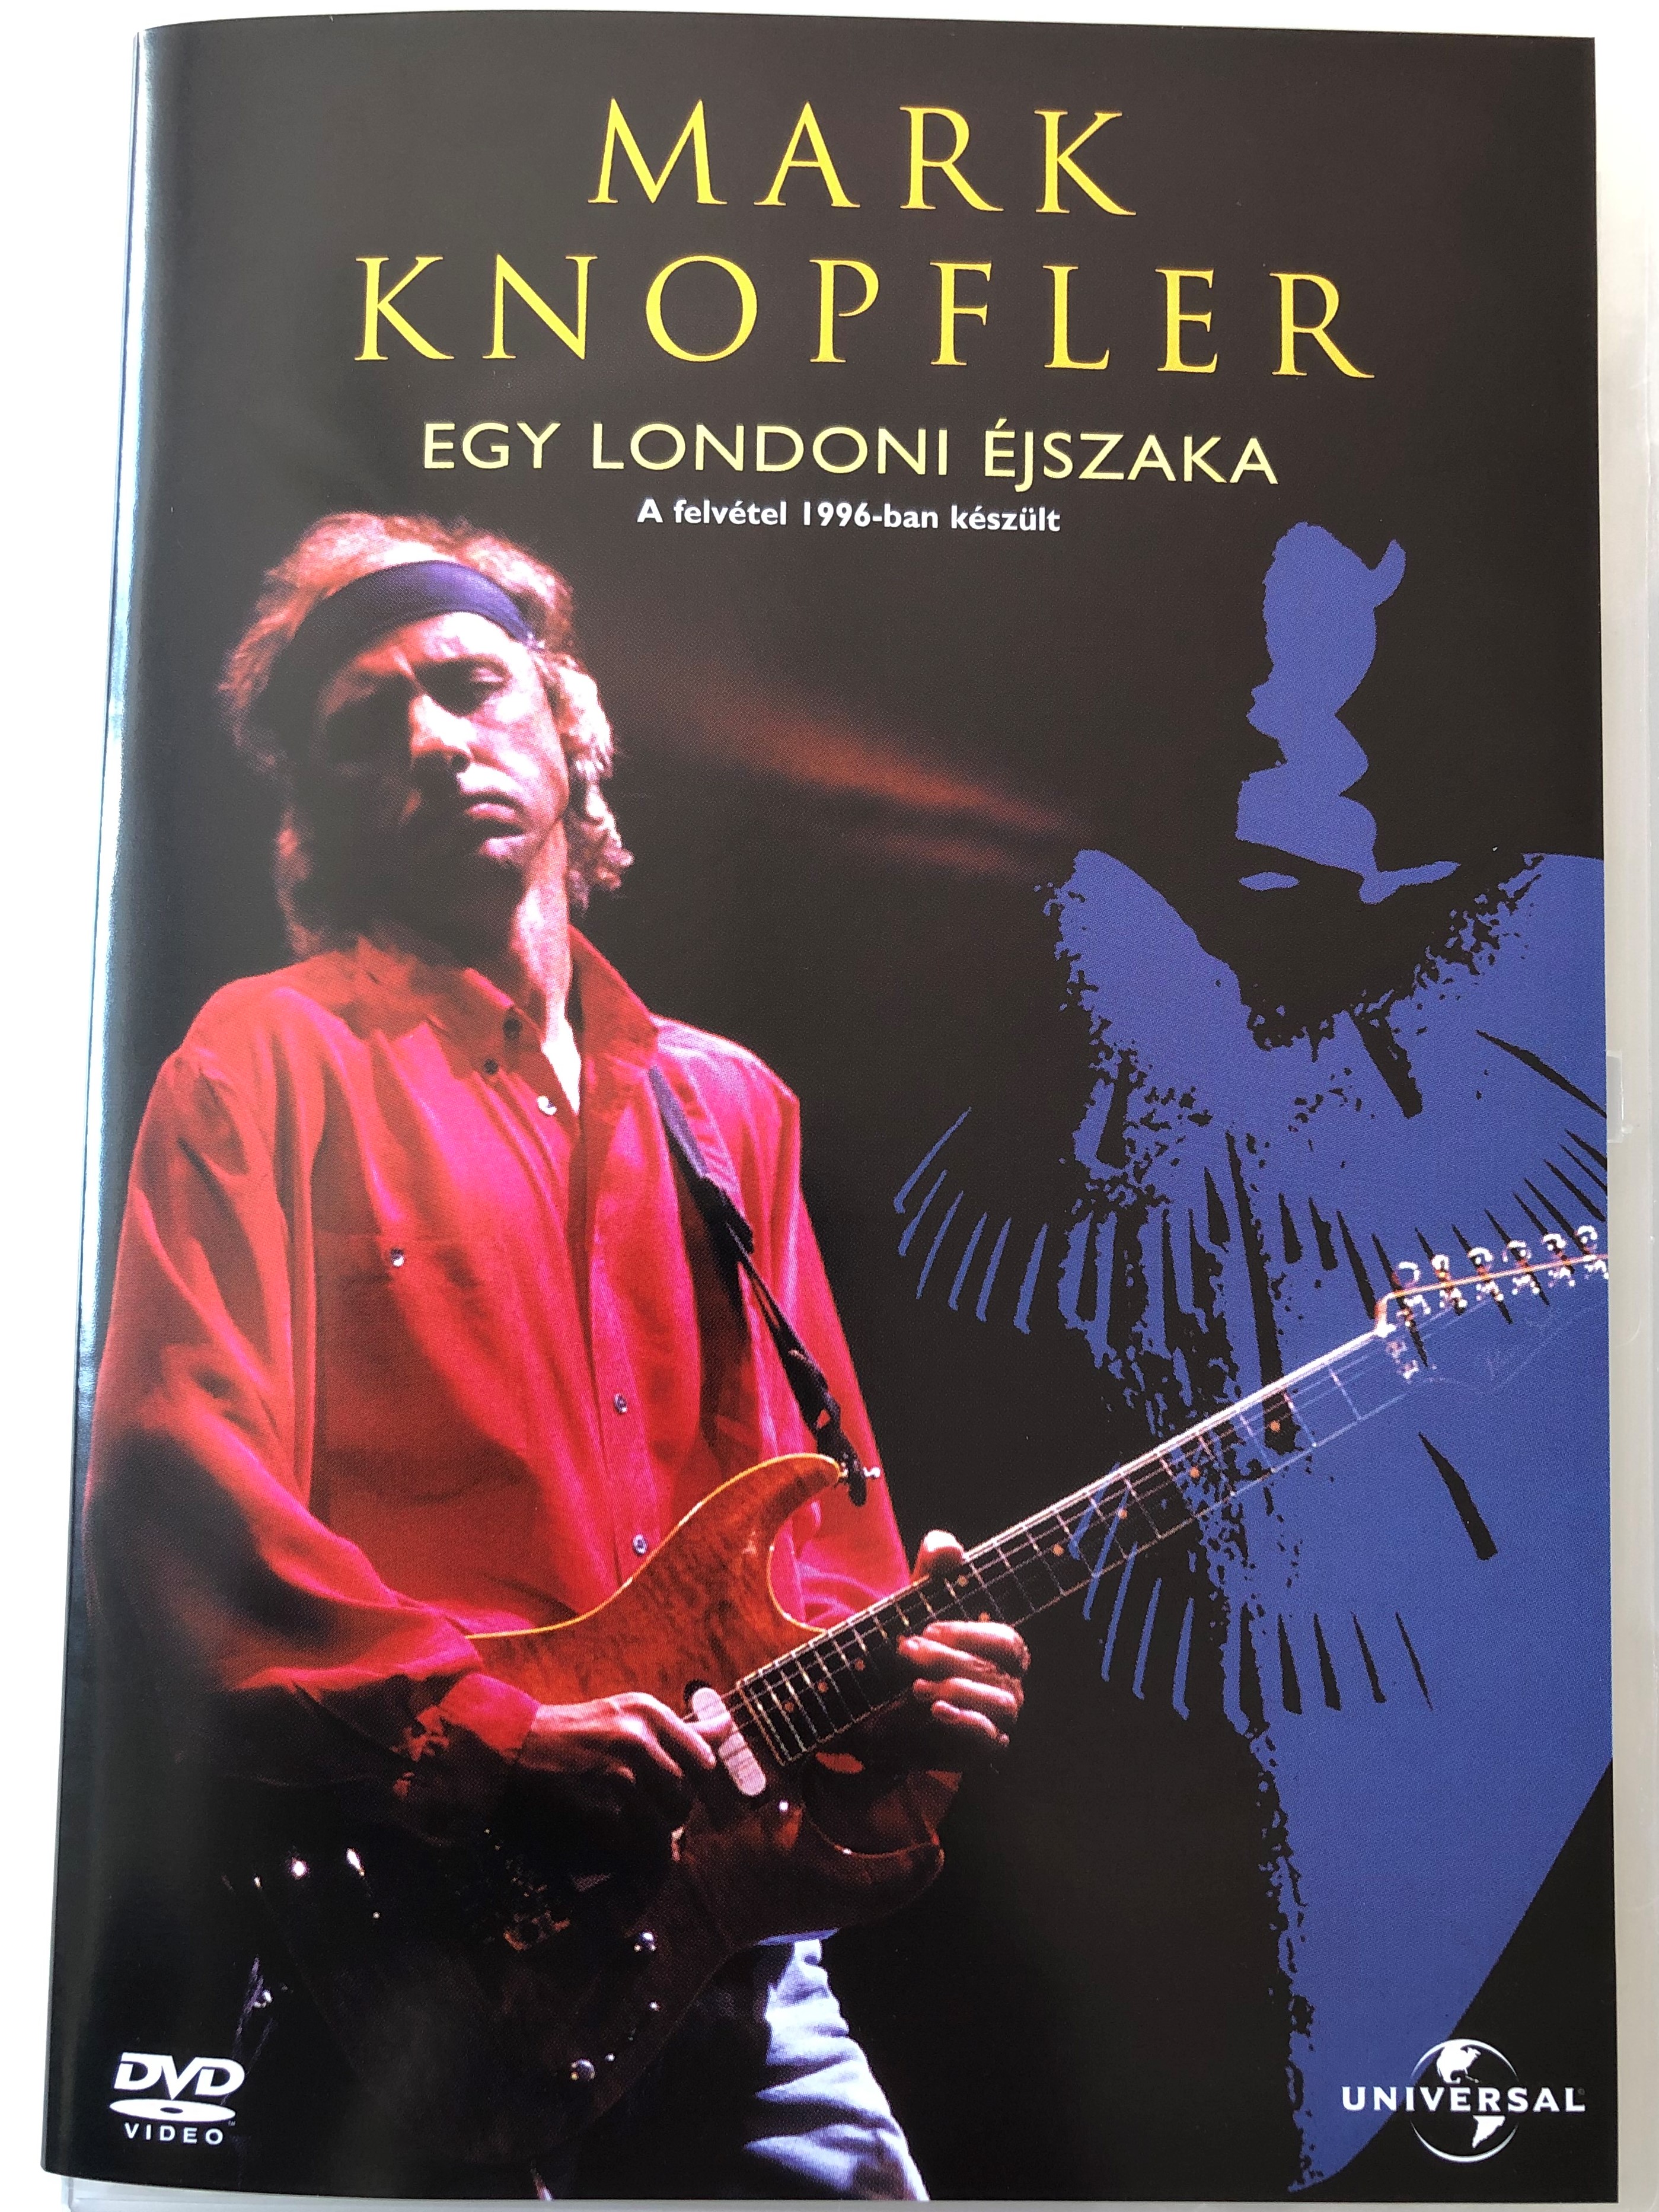 Mark Knopfler - Egy londoni Éjszaka DVD 1996 A Night in London 1996 LIVE  Album / Darling Pretty, Imelda, Golden Heart, Brothers in Arms / A felvétel  1996-ban készült / Universal Music - bibleinmylanguage